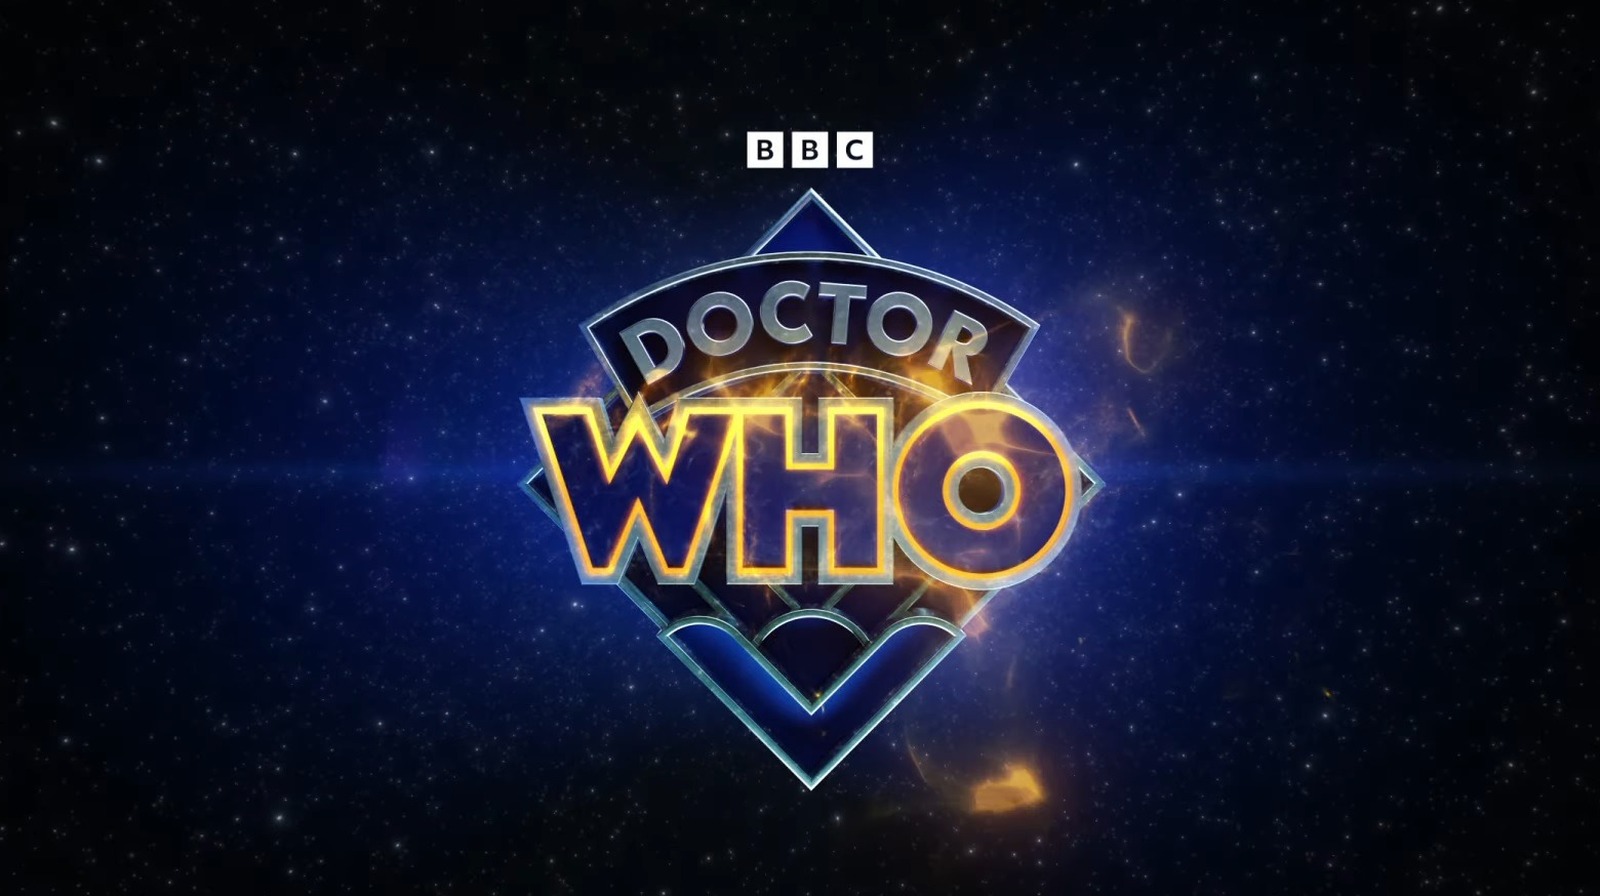 Doctor Who, in programma nuovi spin-off per la celebre serie?  [RUMOR]